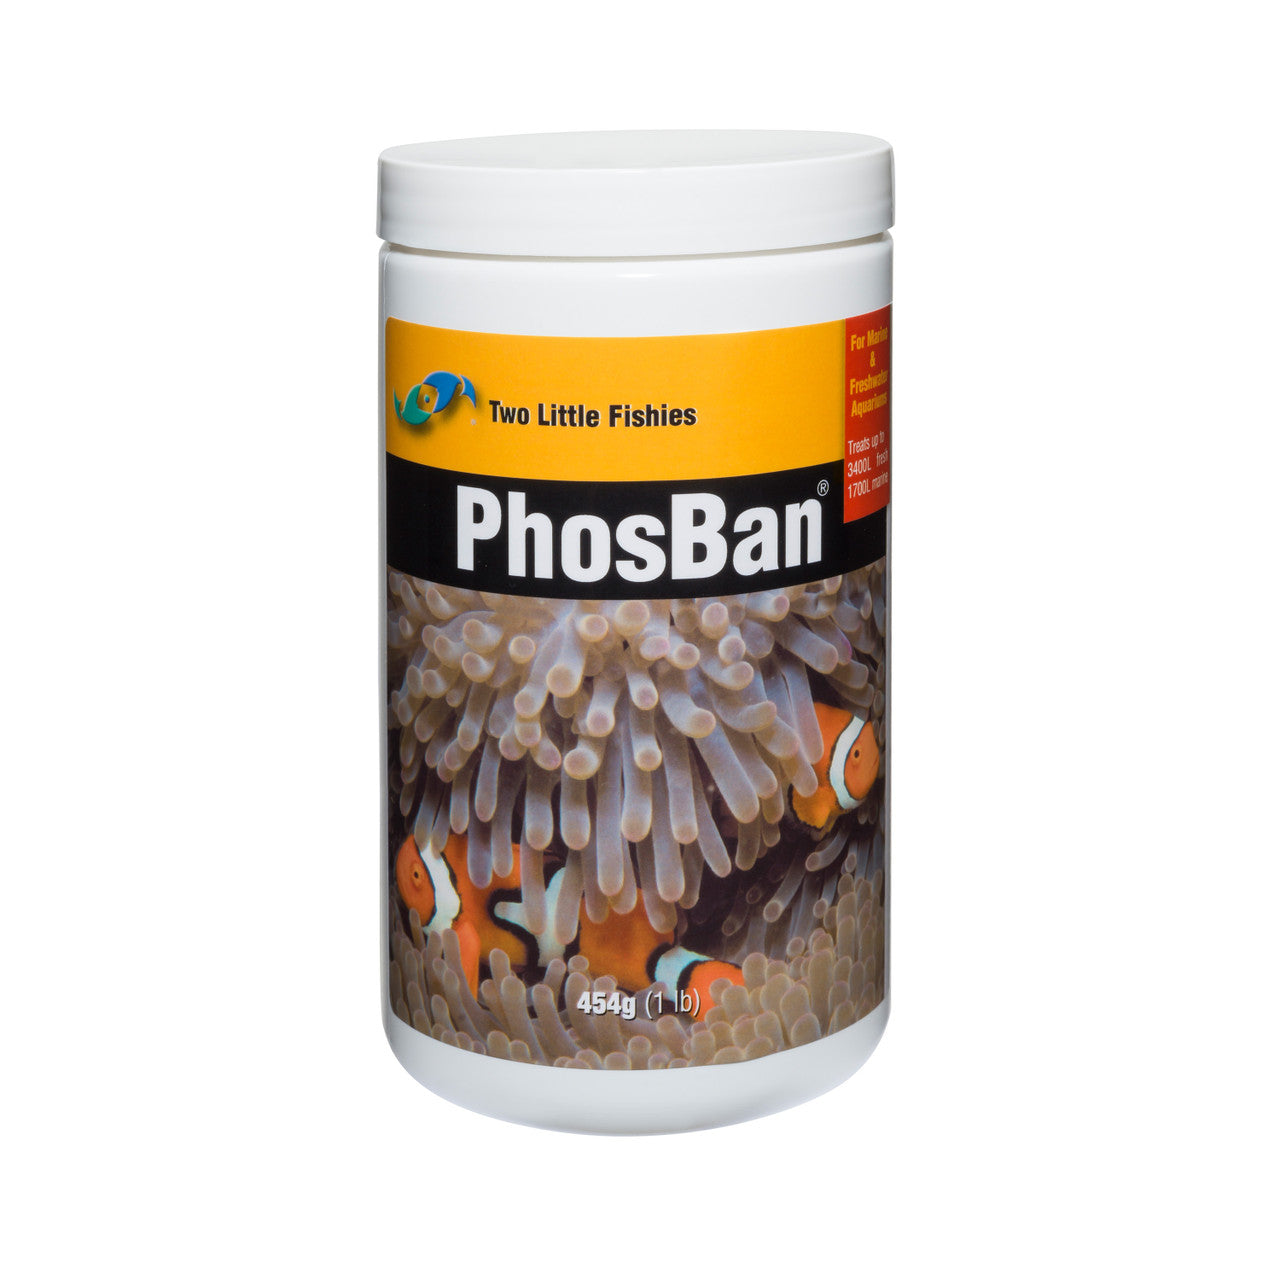 Two Little Fishies PhosBan Phosphate Adsorption Media 454 g